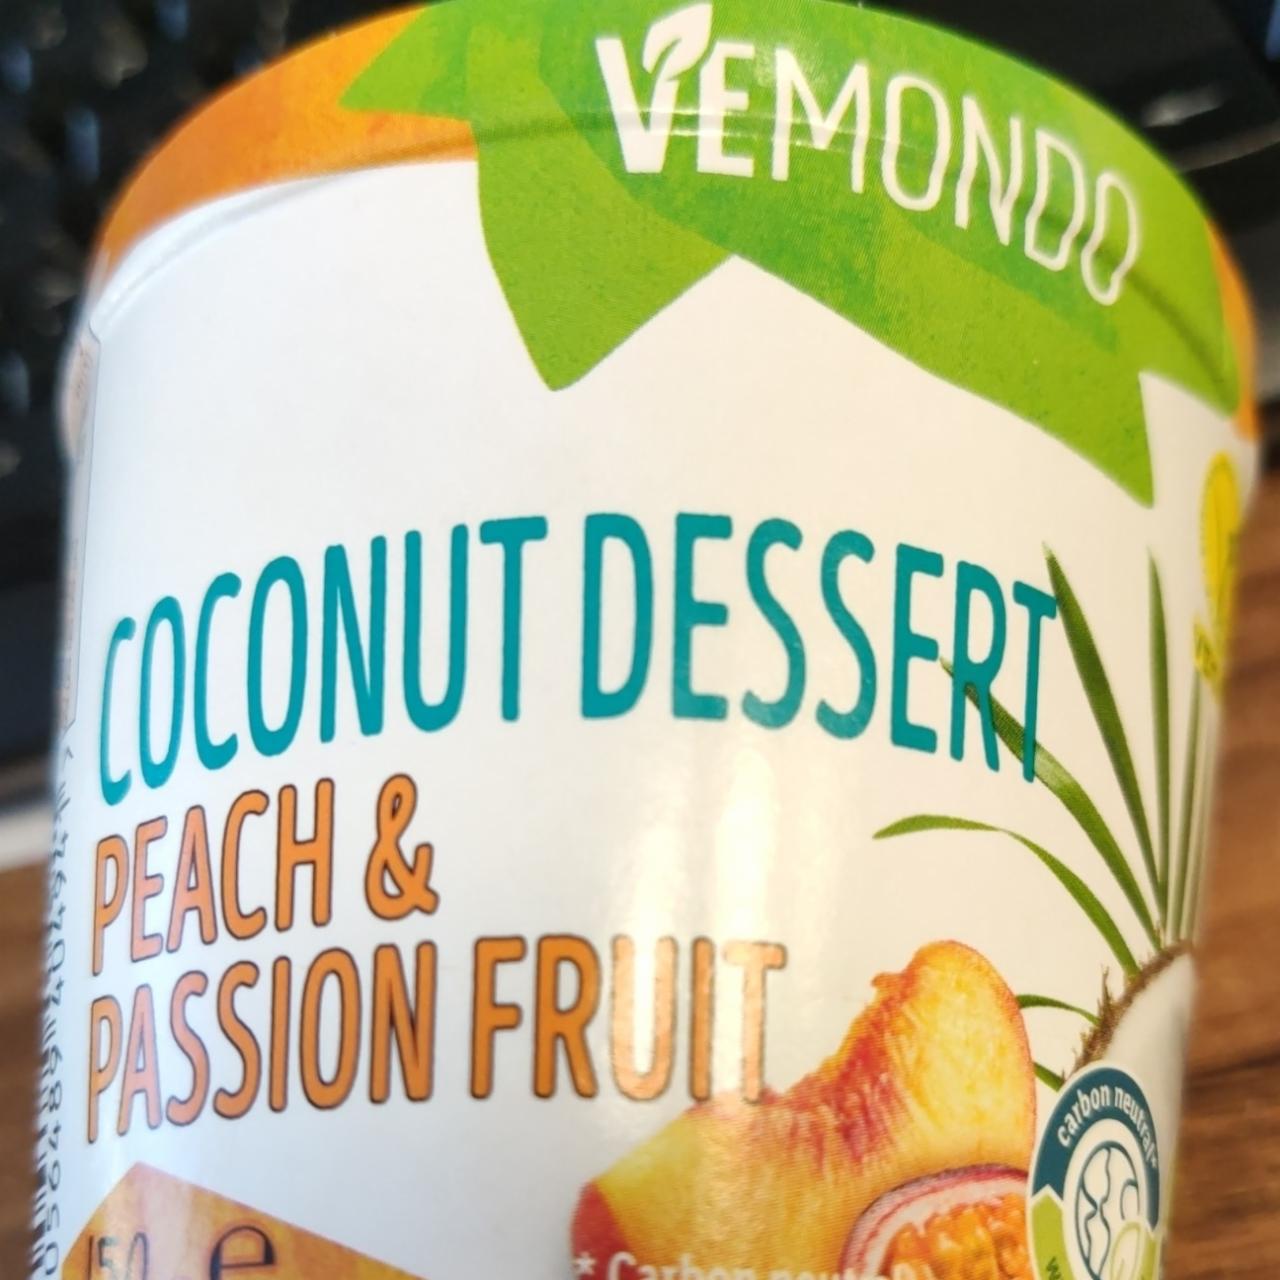 Zdjęcia - Coconut dessert peach & passion fruit Vemondo